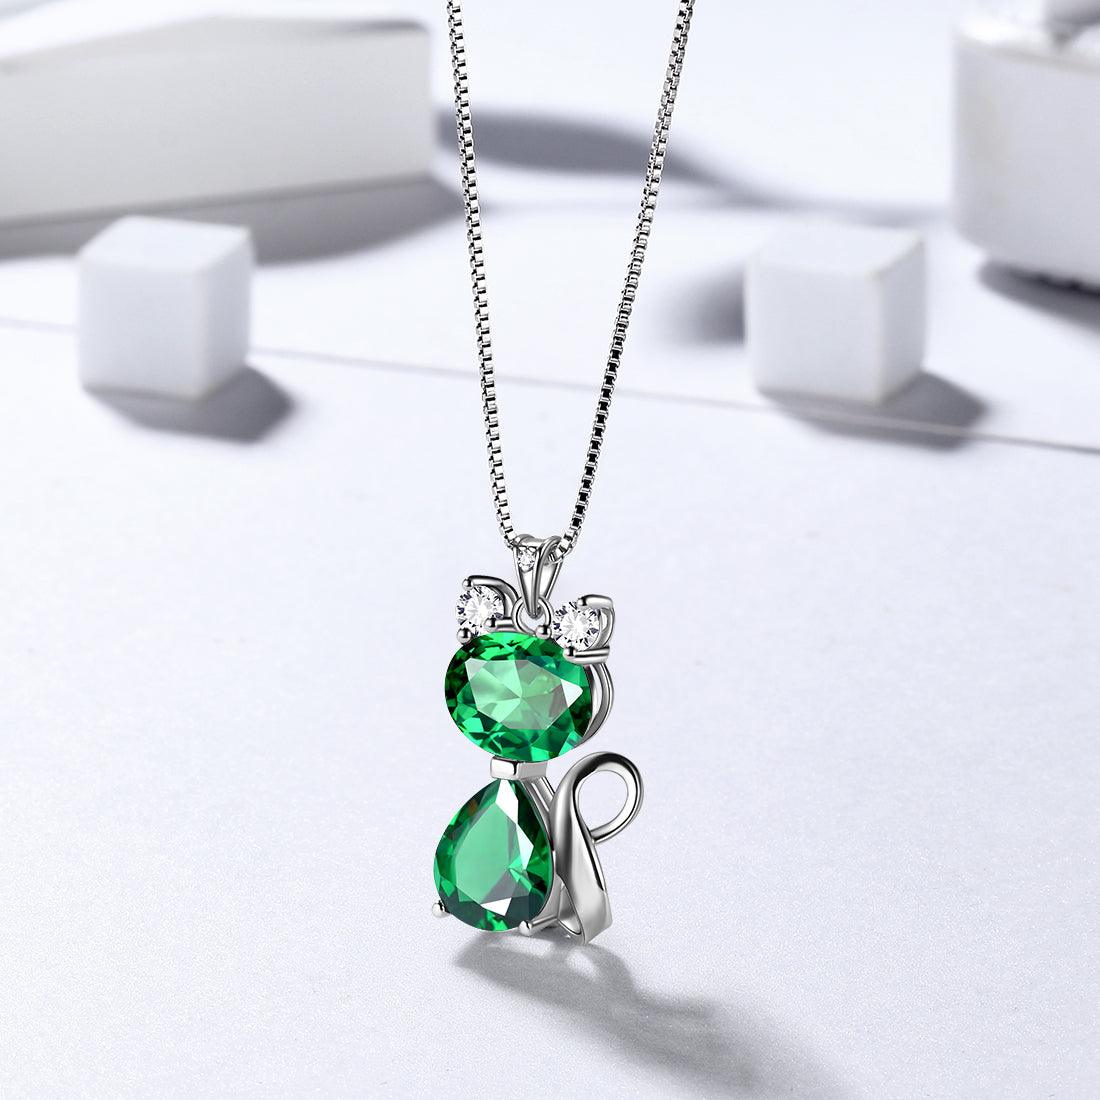 Cats Necklace Earrings Jewelry Green May Birthstone - Jewelry Set - Aurora Tears Jewelry